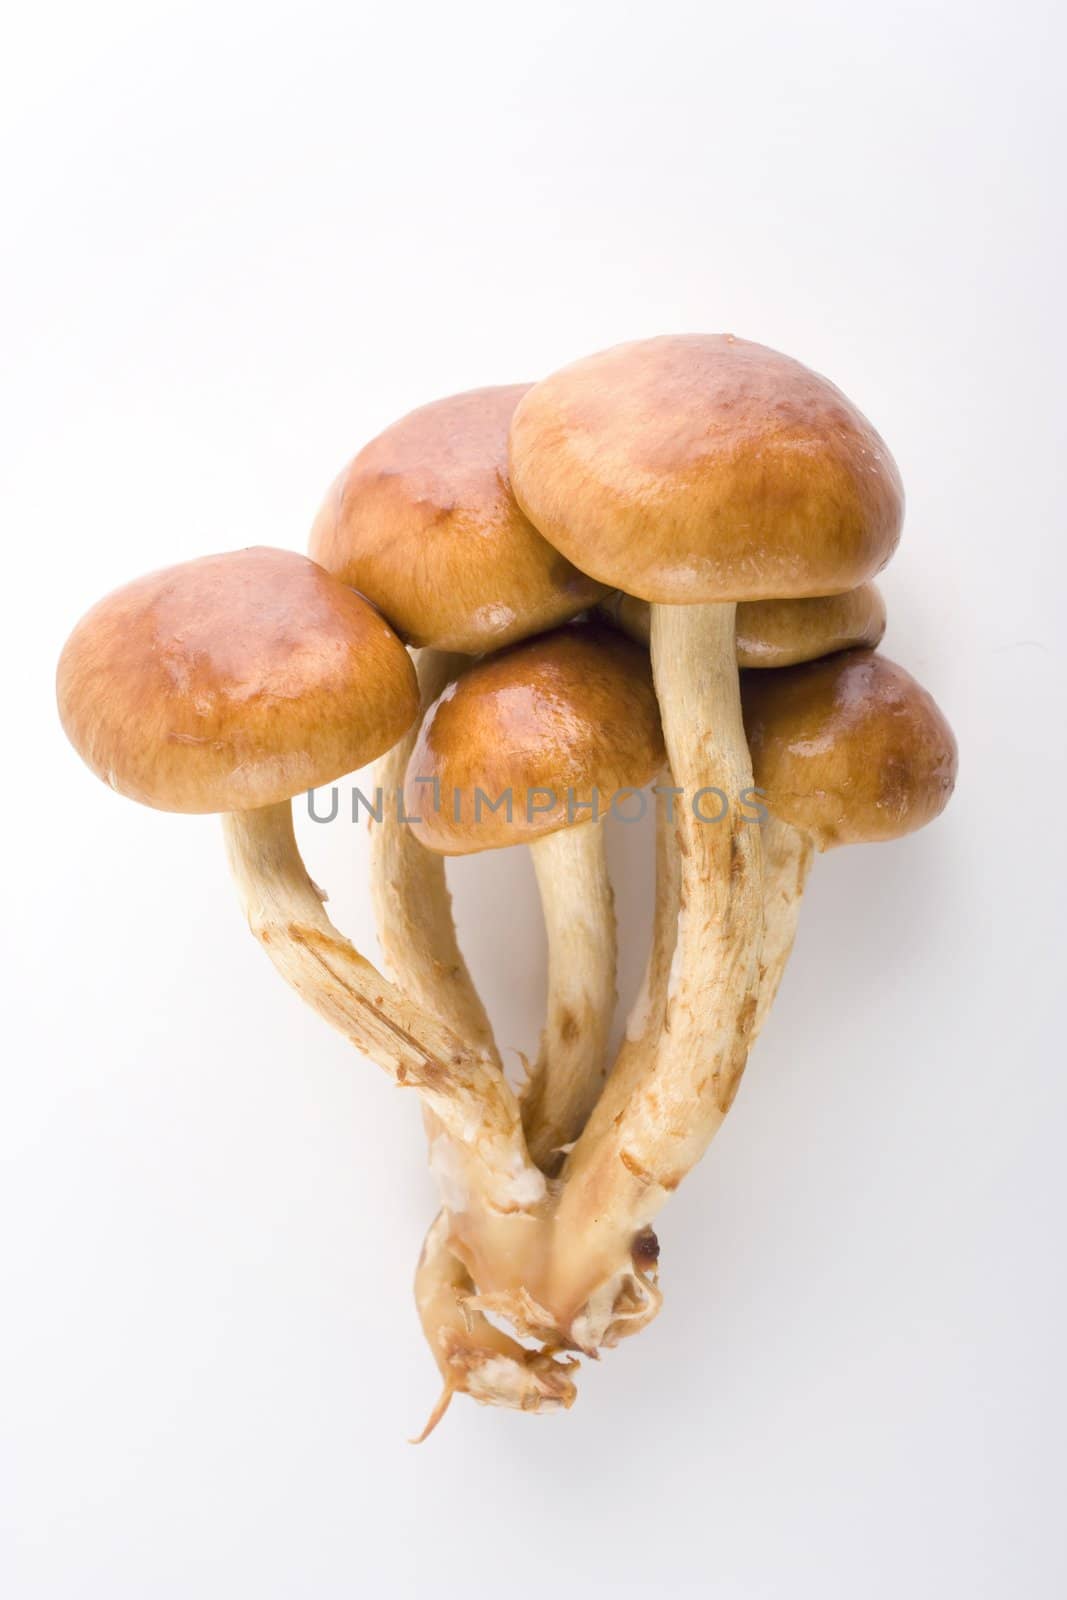 Nameko mushrooms on white background